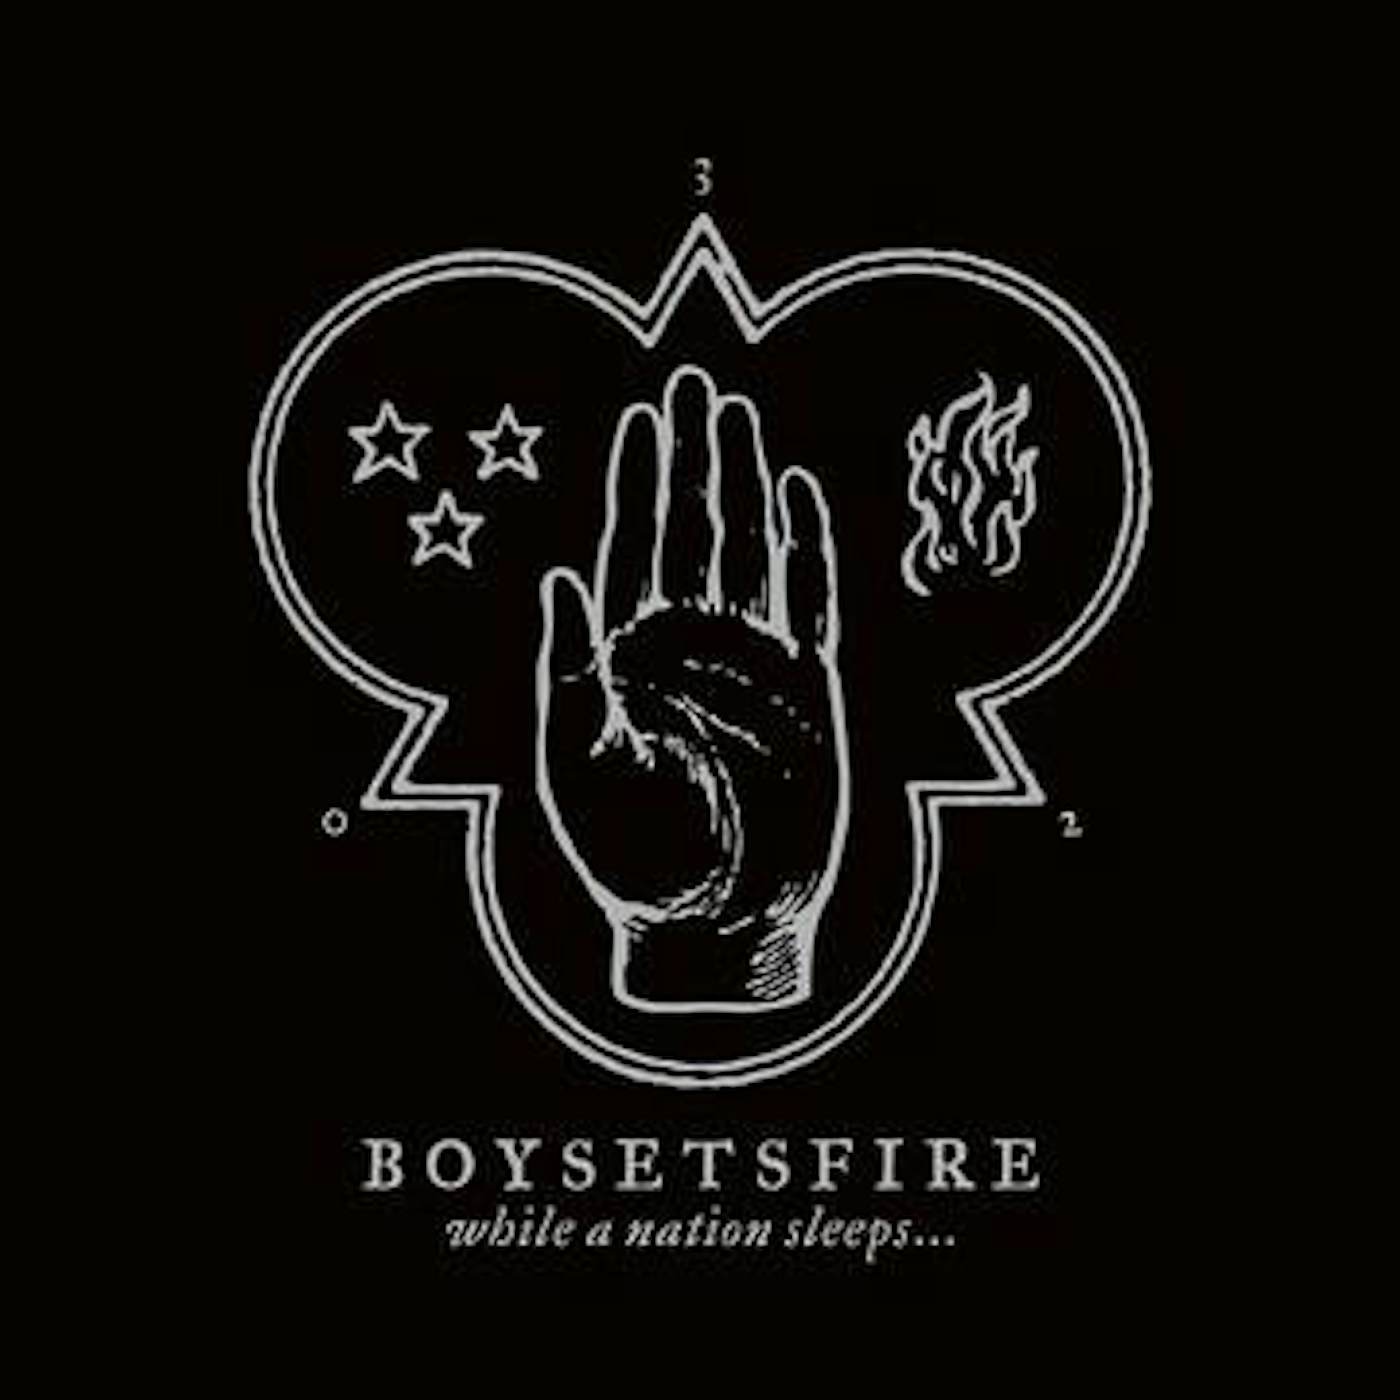 Boysetsfire WHILE A NATION SLEEPS CD